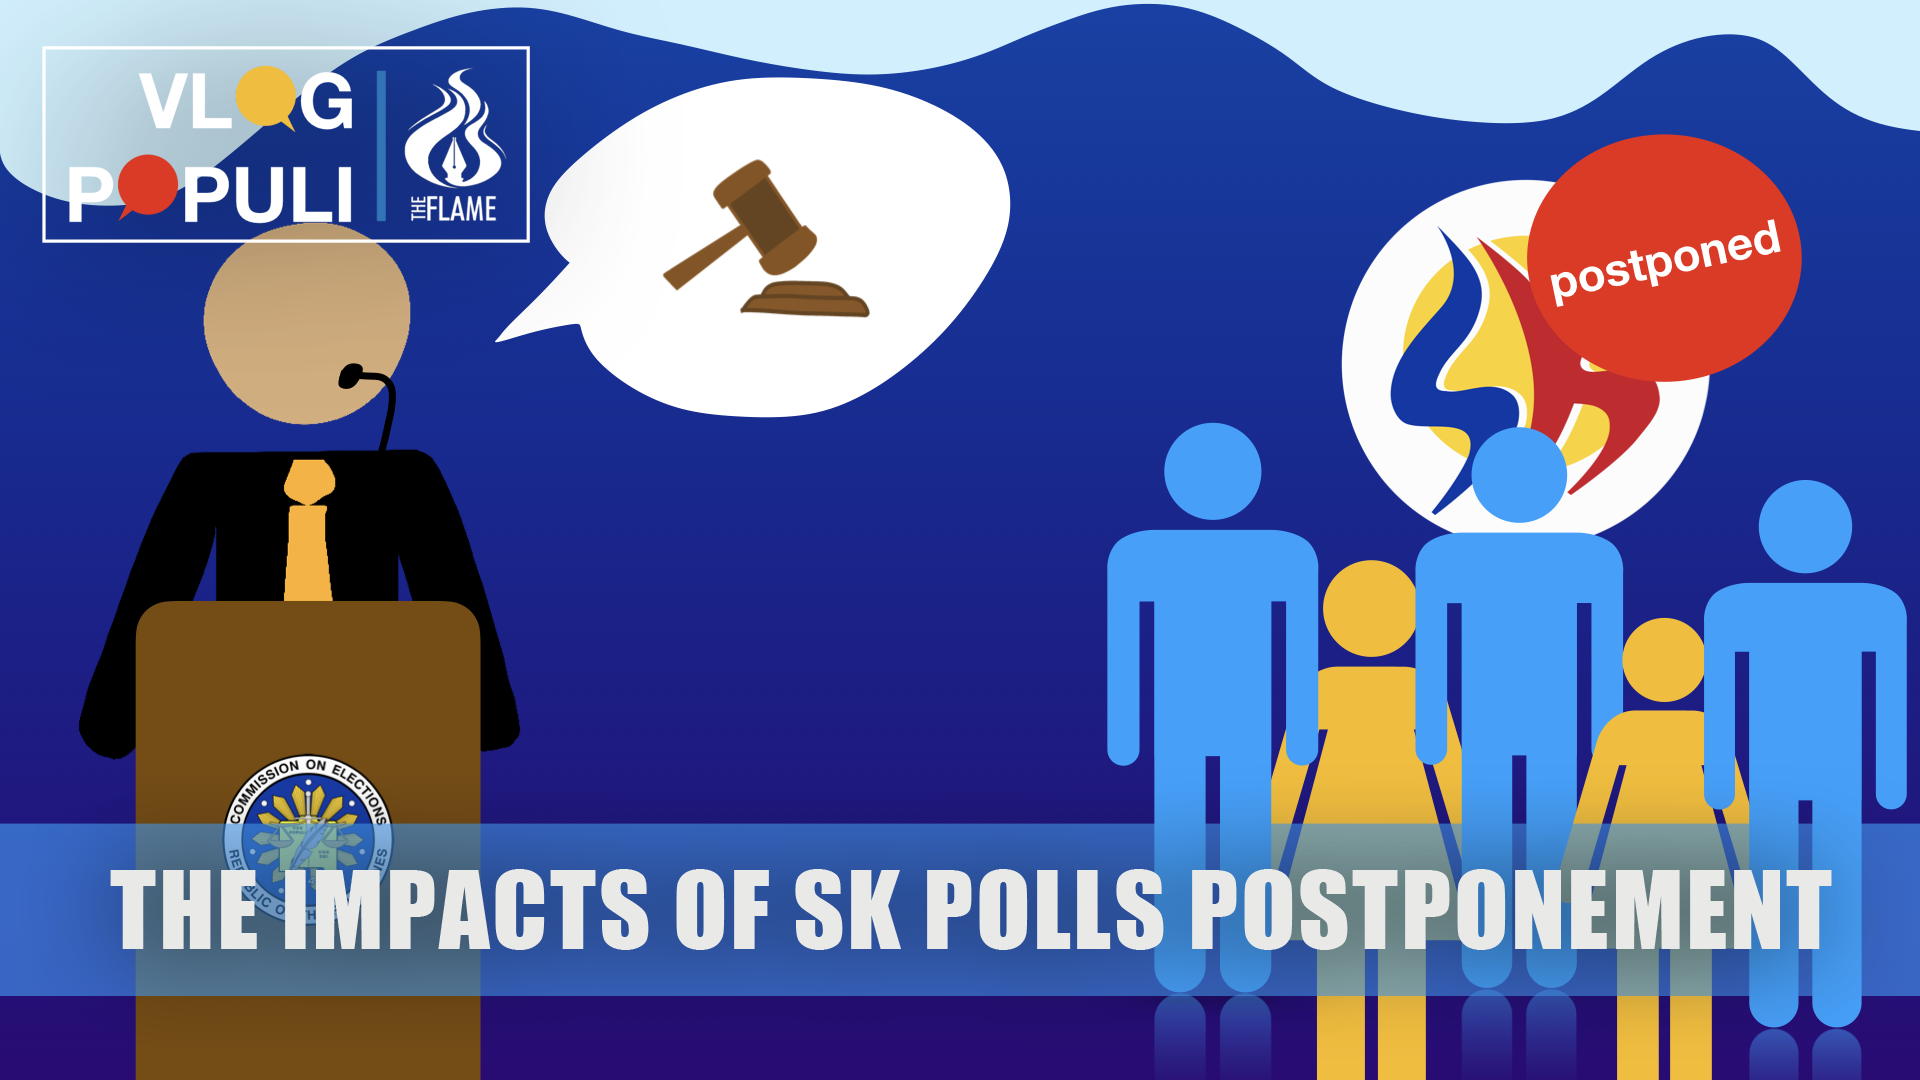 VLOG POPULI: The impacts of SK polls postponement